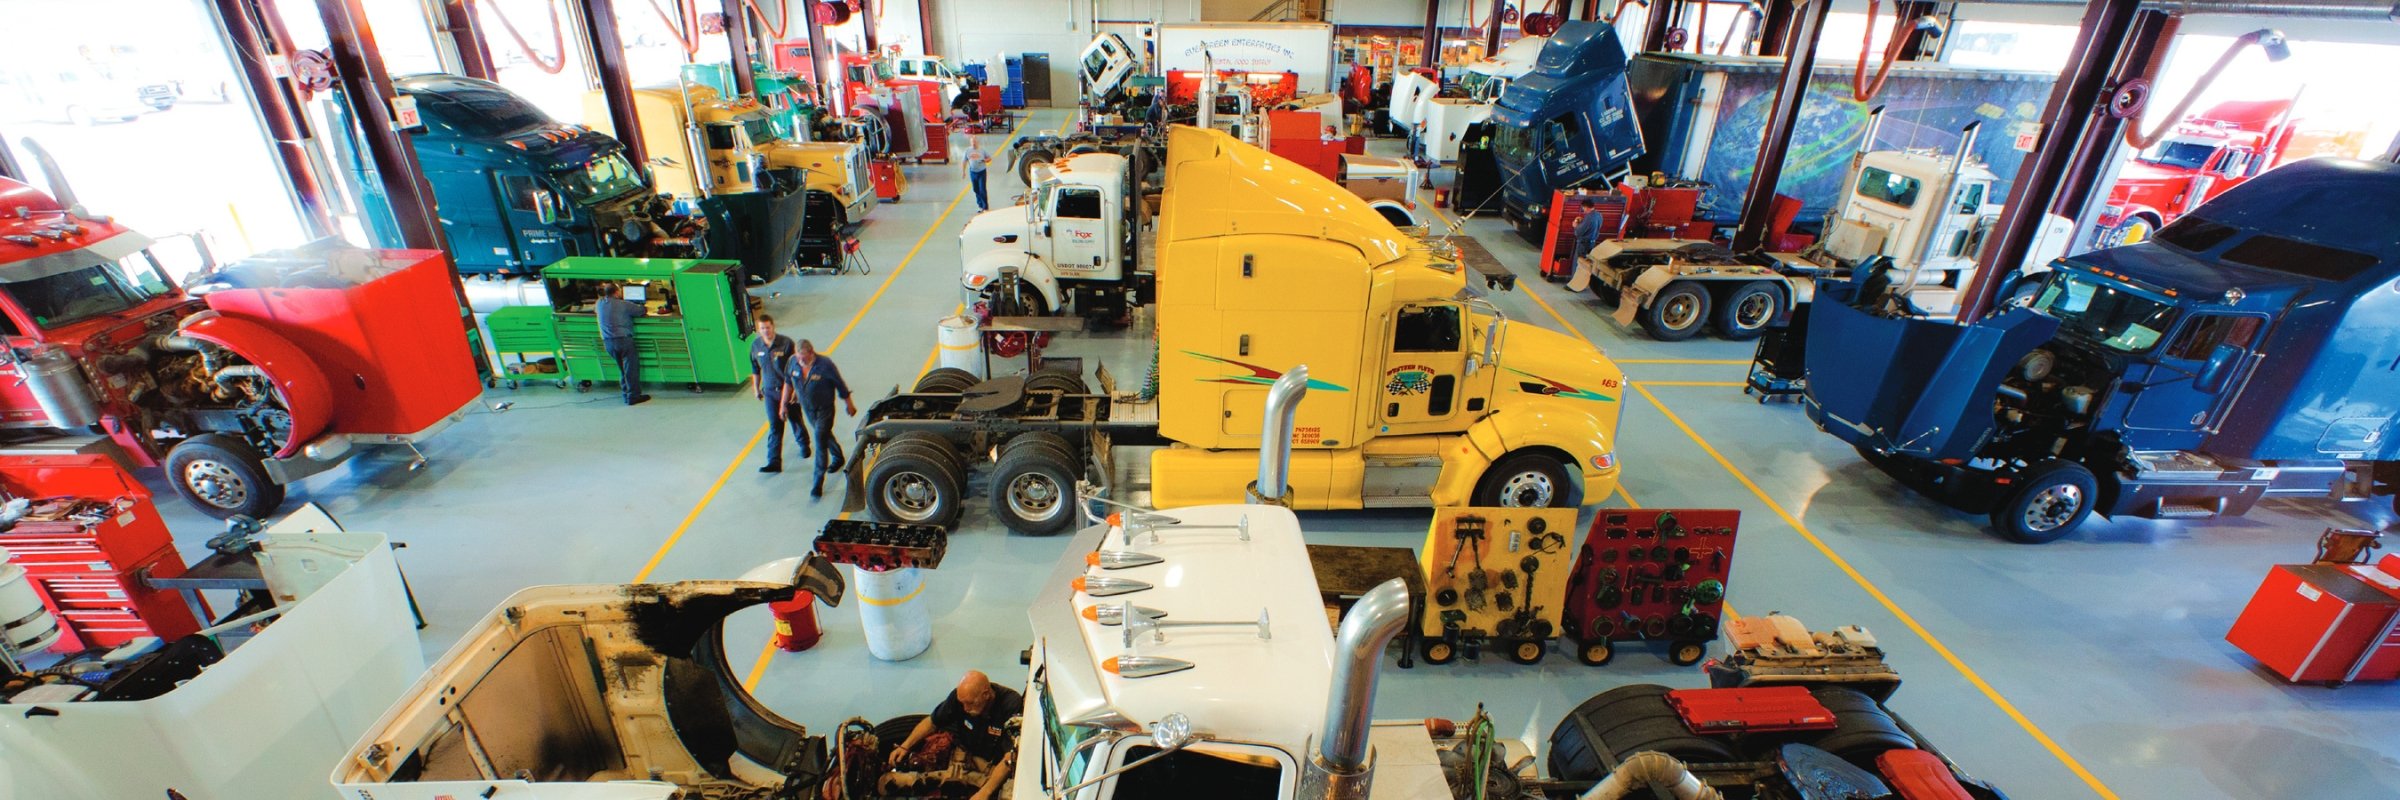 Truck Services Bays | Truck Repair | Truck Maintenance | Truck Service | Truck Repair Shops